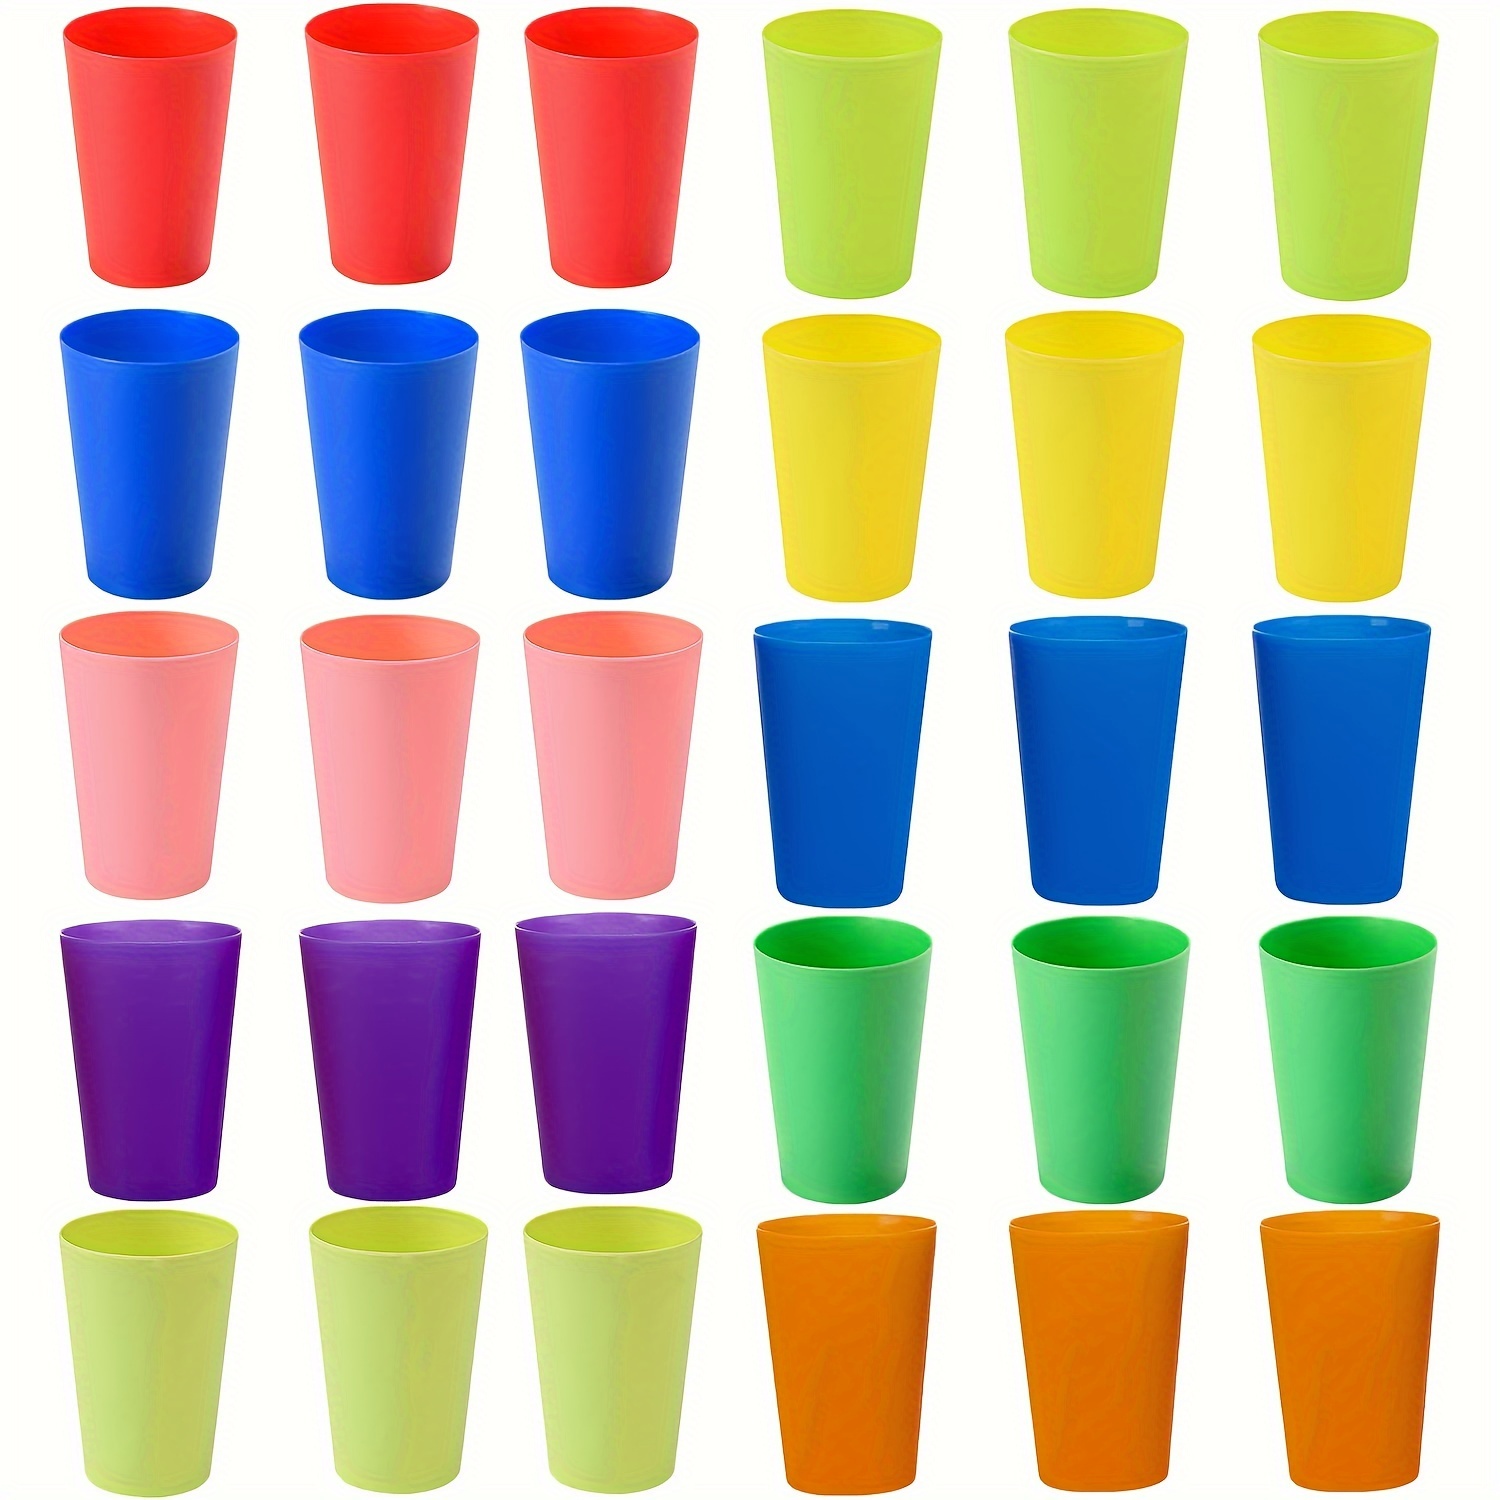 https://img.kwcdn.com/product/colorful-plastic-cups/d69d2f15w98k18-ecc89670/Fancyalgo/VirtualModelMatting/8ed857dc2dd40c95ca43c2b2362c5b9f.jpg